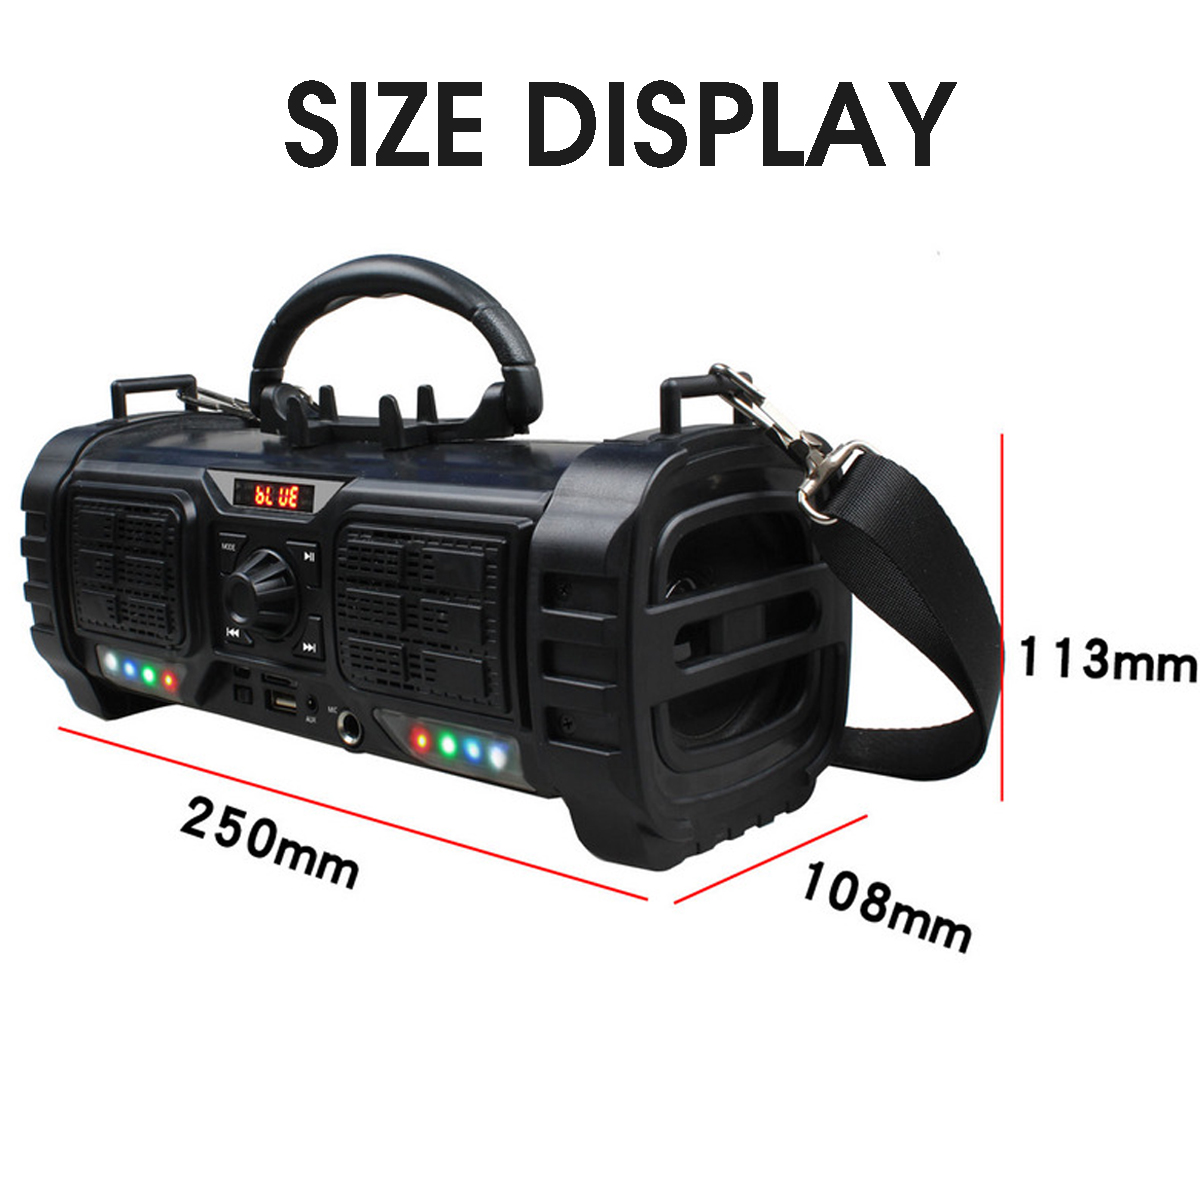 Bakeey-220mAh-Wireless-bluetooth-Speaker-Subwoofer-HD-MIC-AUX-355mm-Port-FM-Raido-Heavy-Bass-Music-A-1650387-6